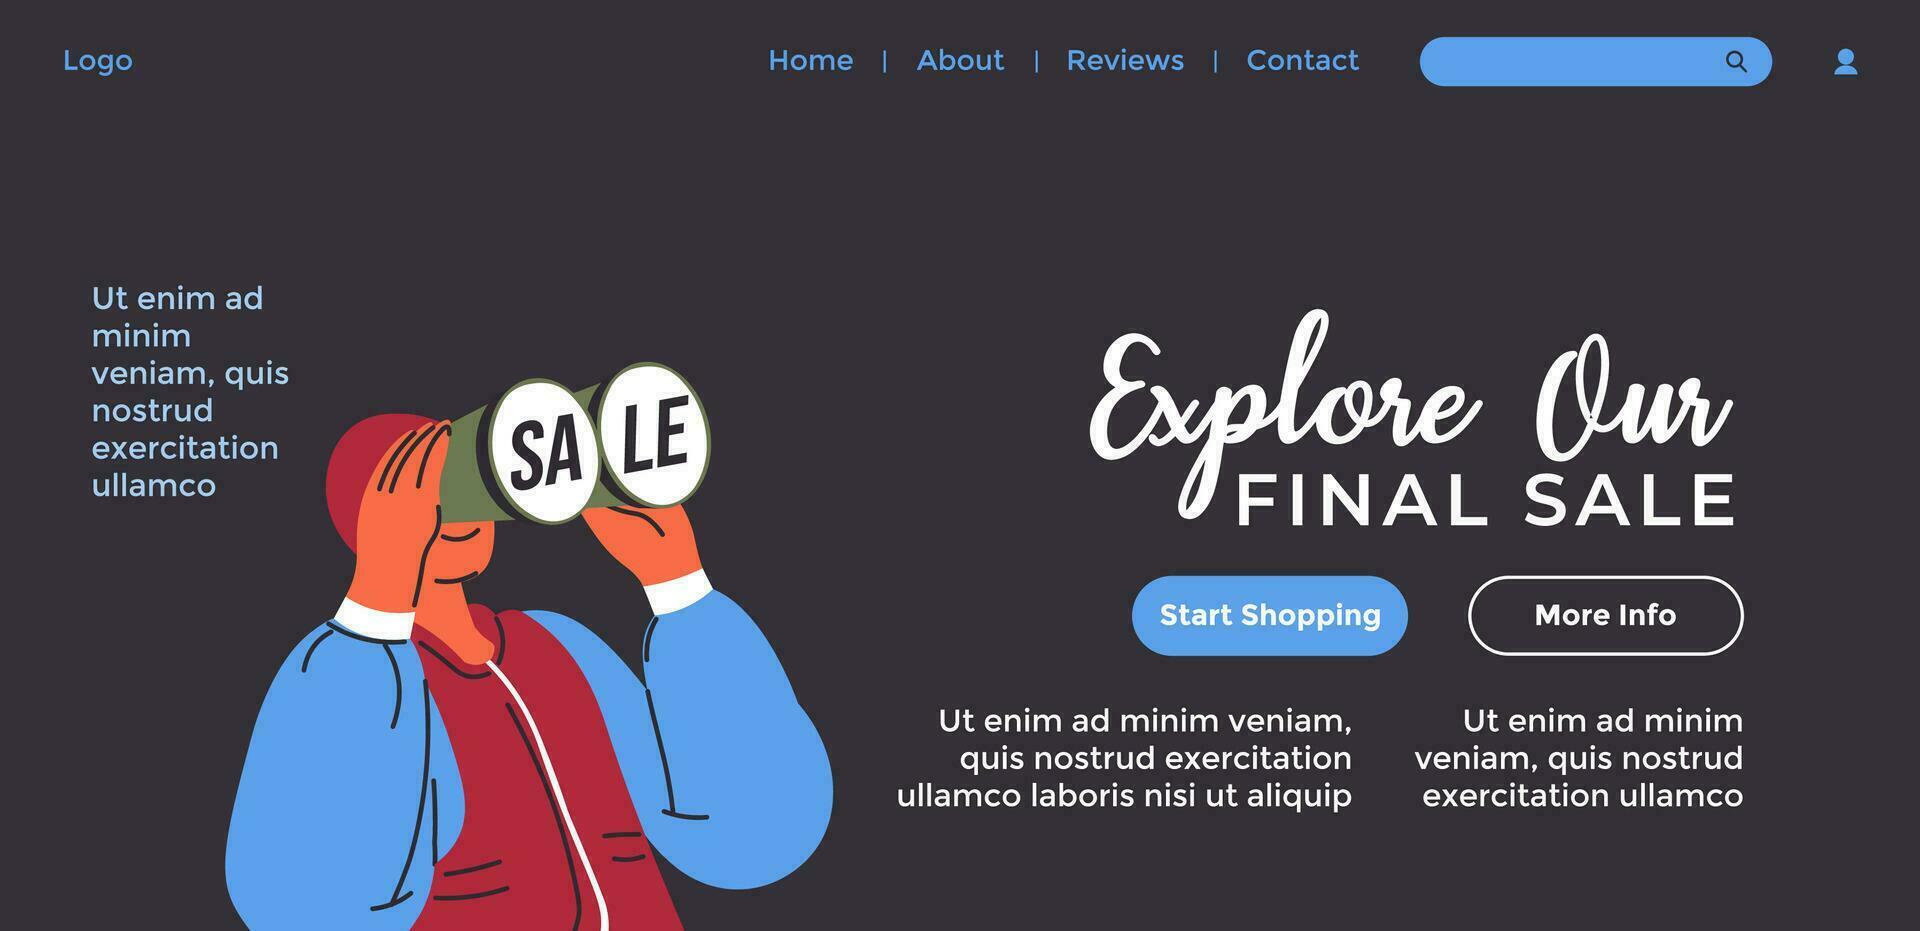 Explore our final sale, start shopping, website vector